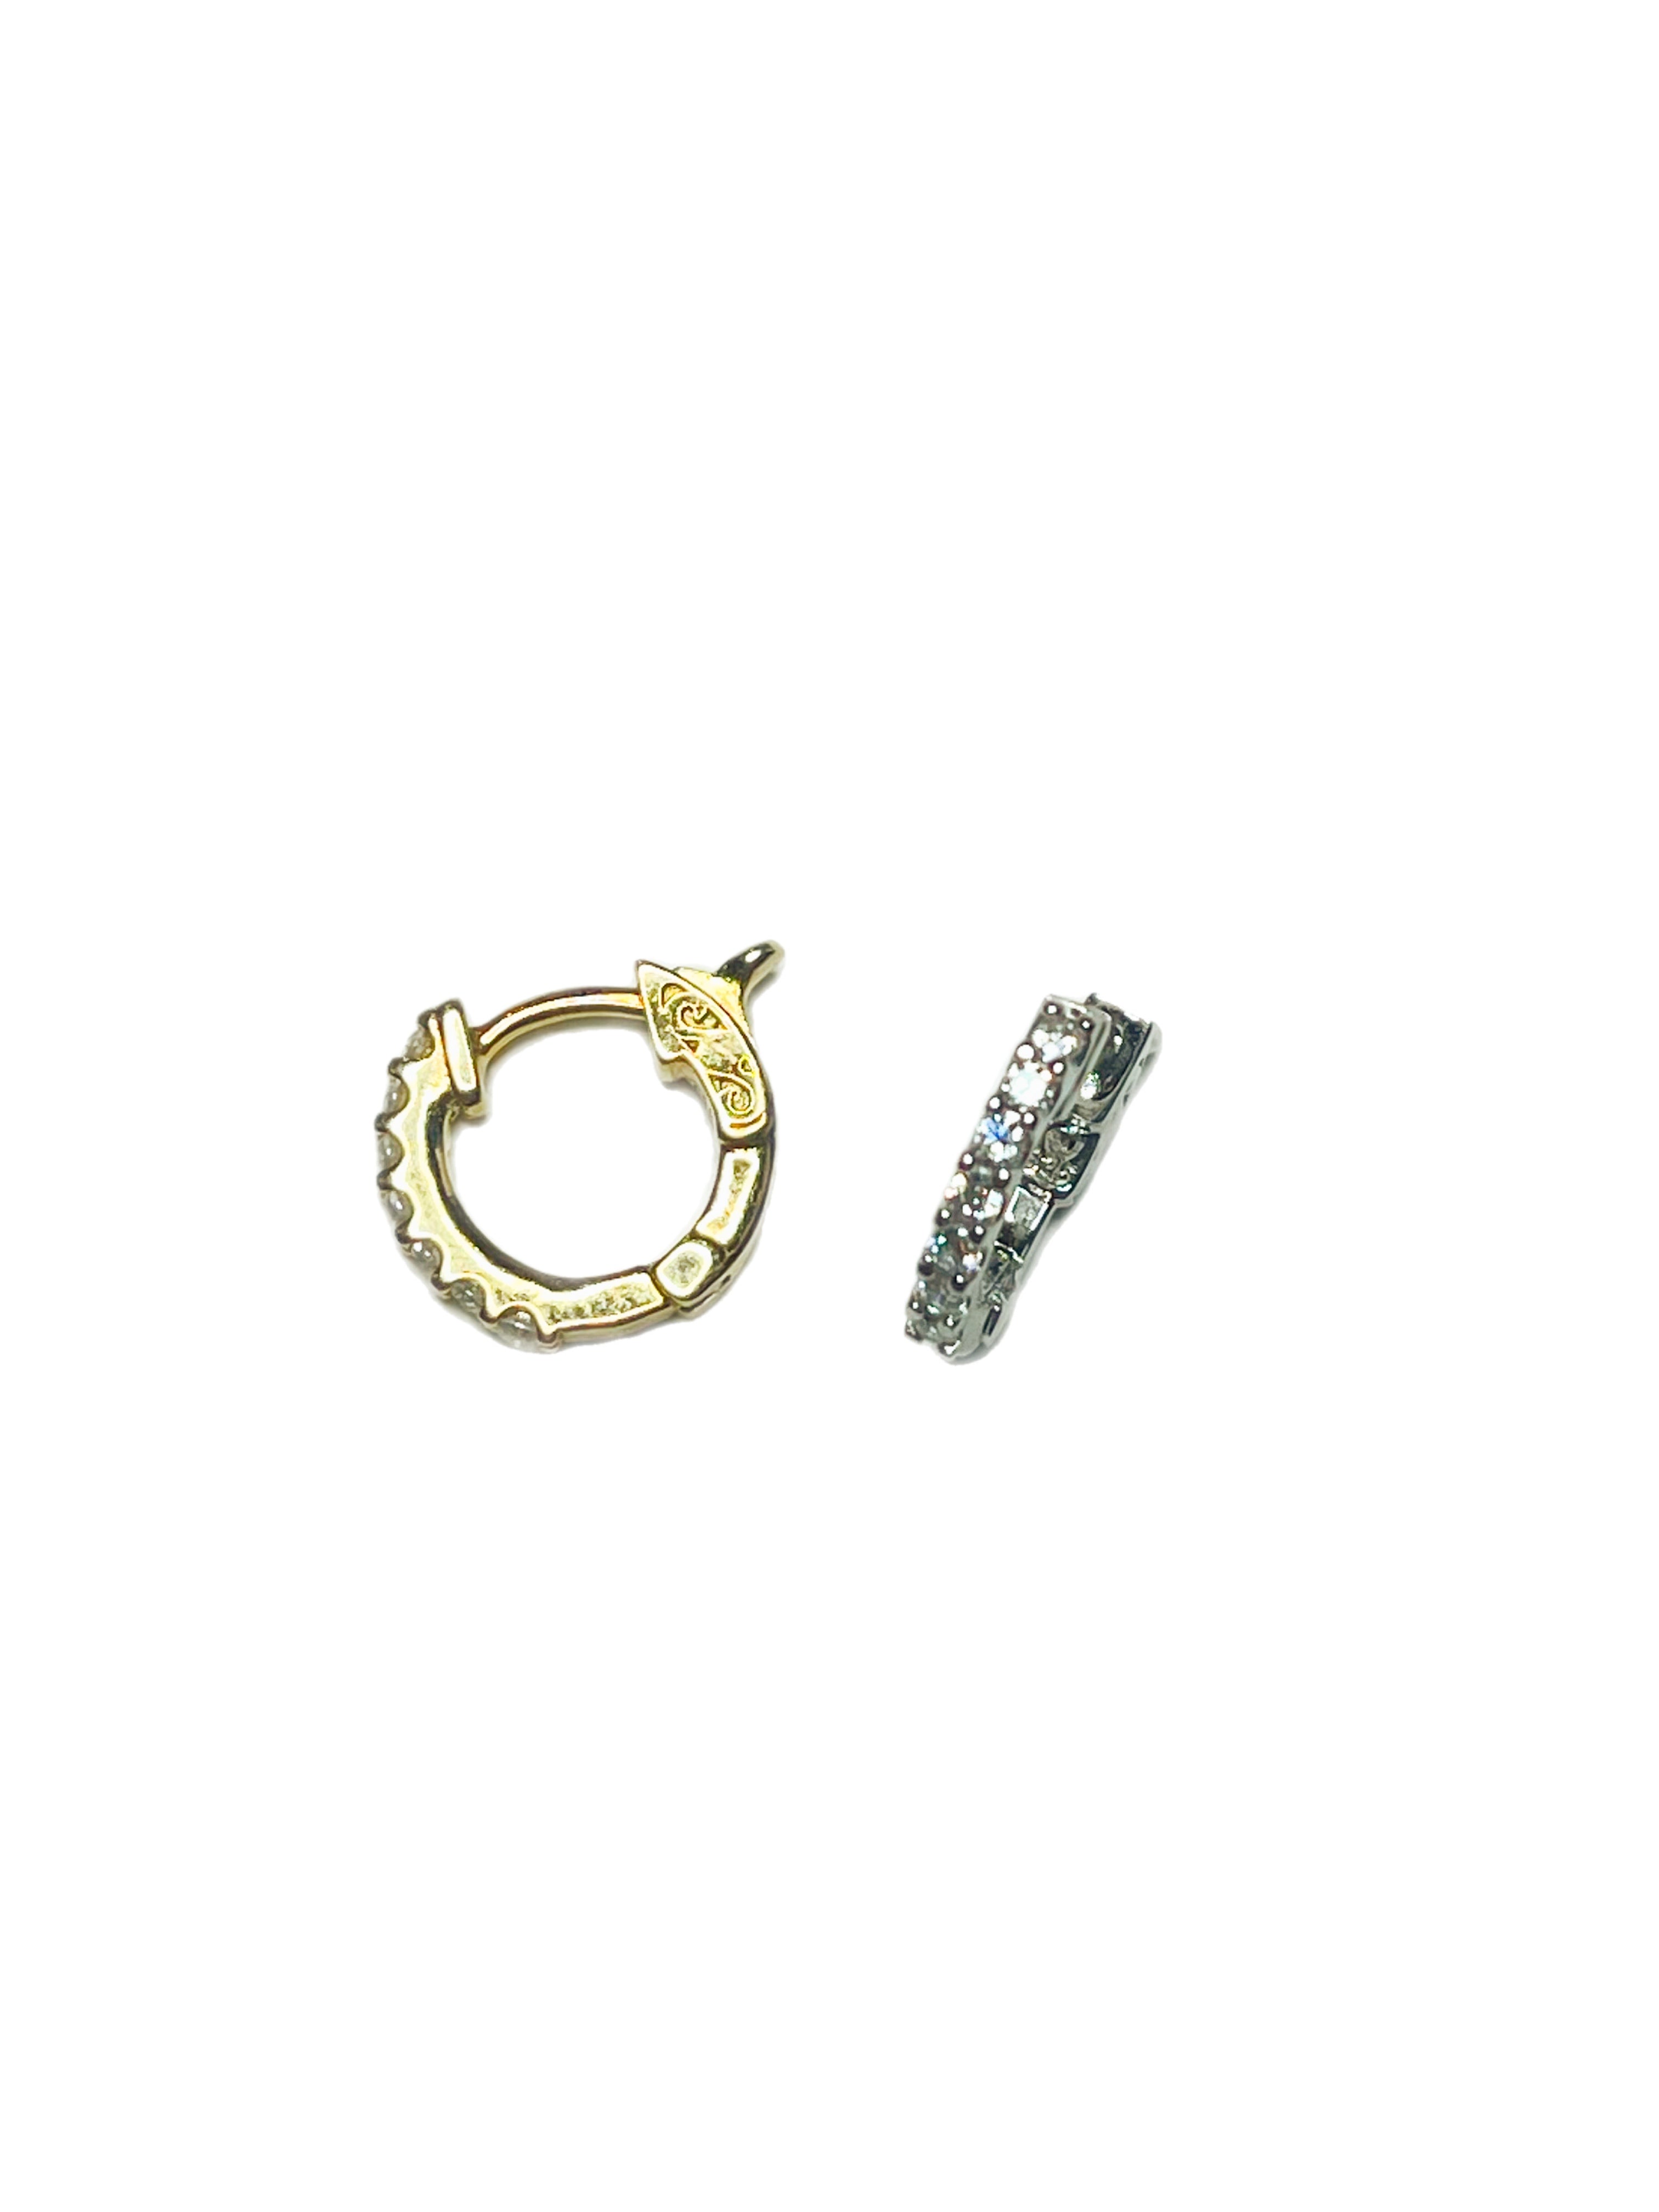 CZ Huggie - sterling silver earrings with CZ’s